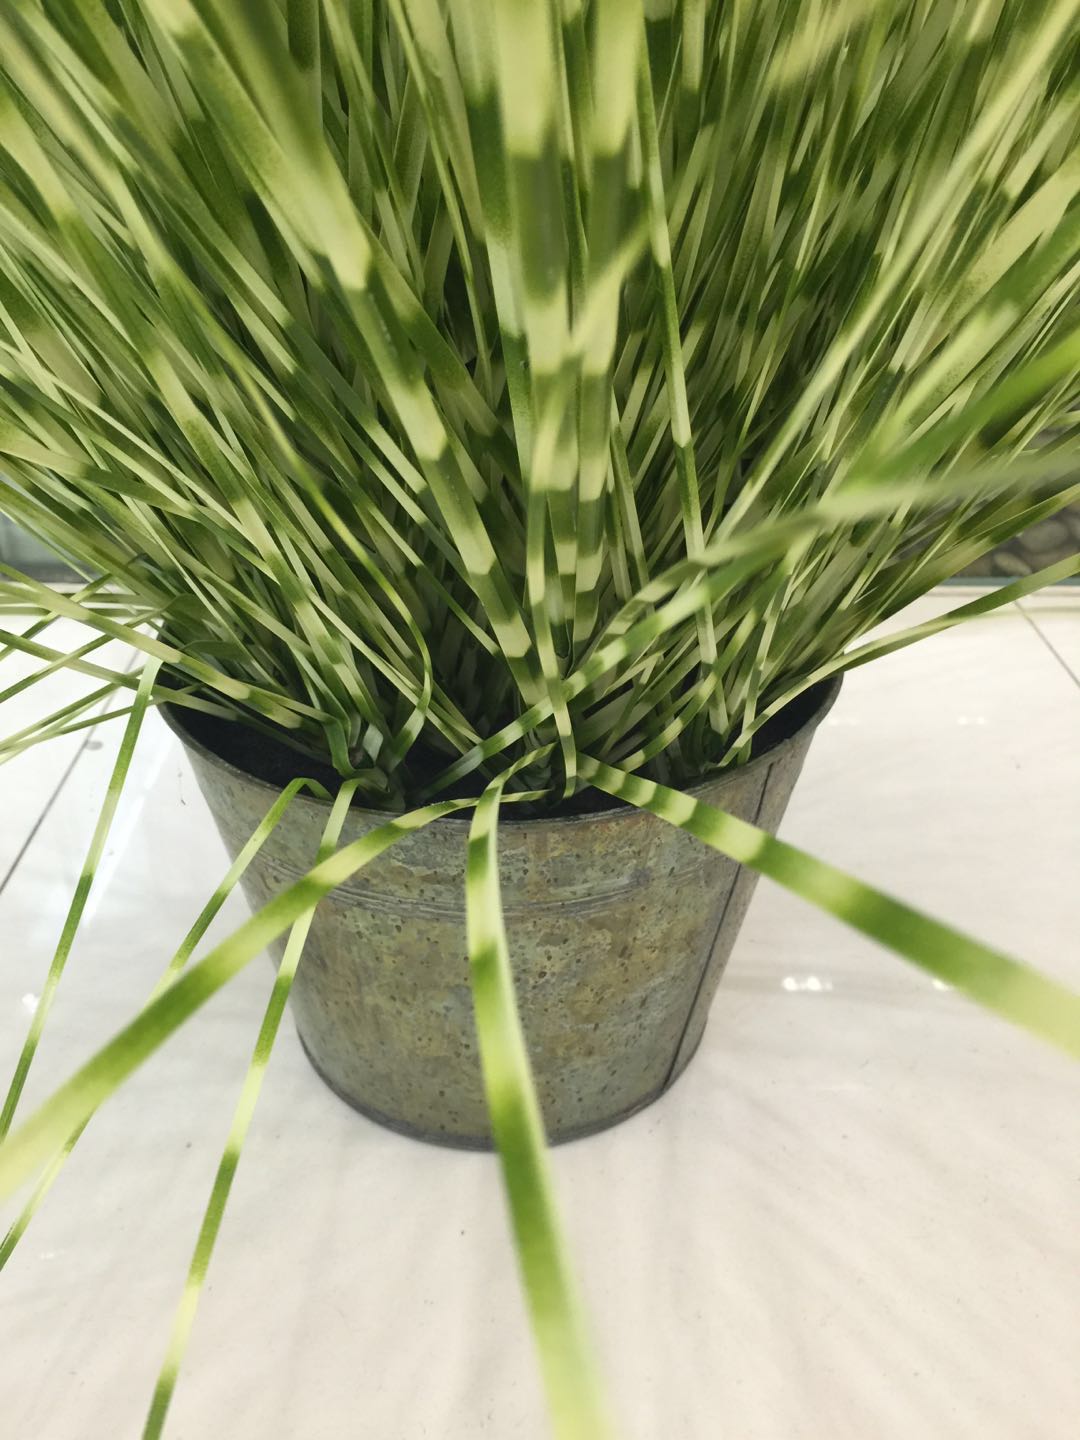 Simple field zebra grass iron basin simulation plant simulation plant home decoration3